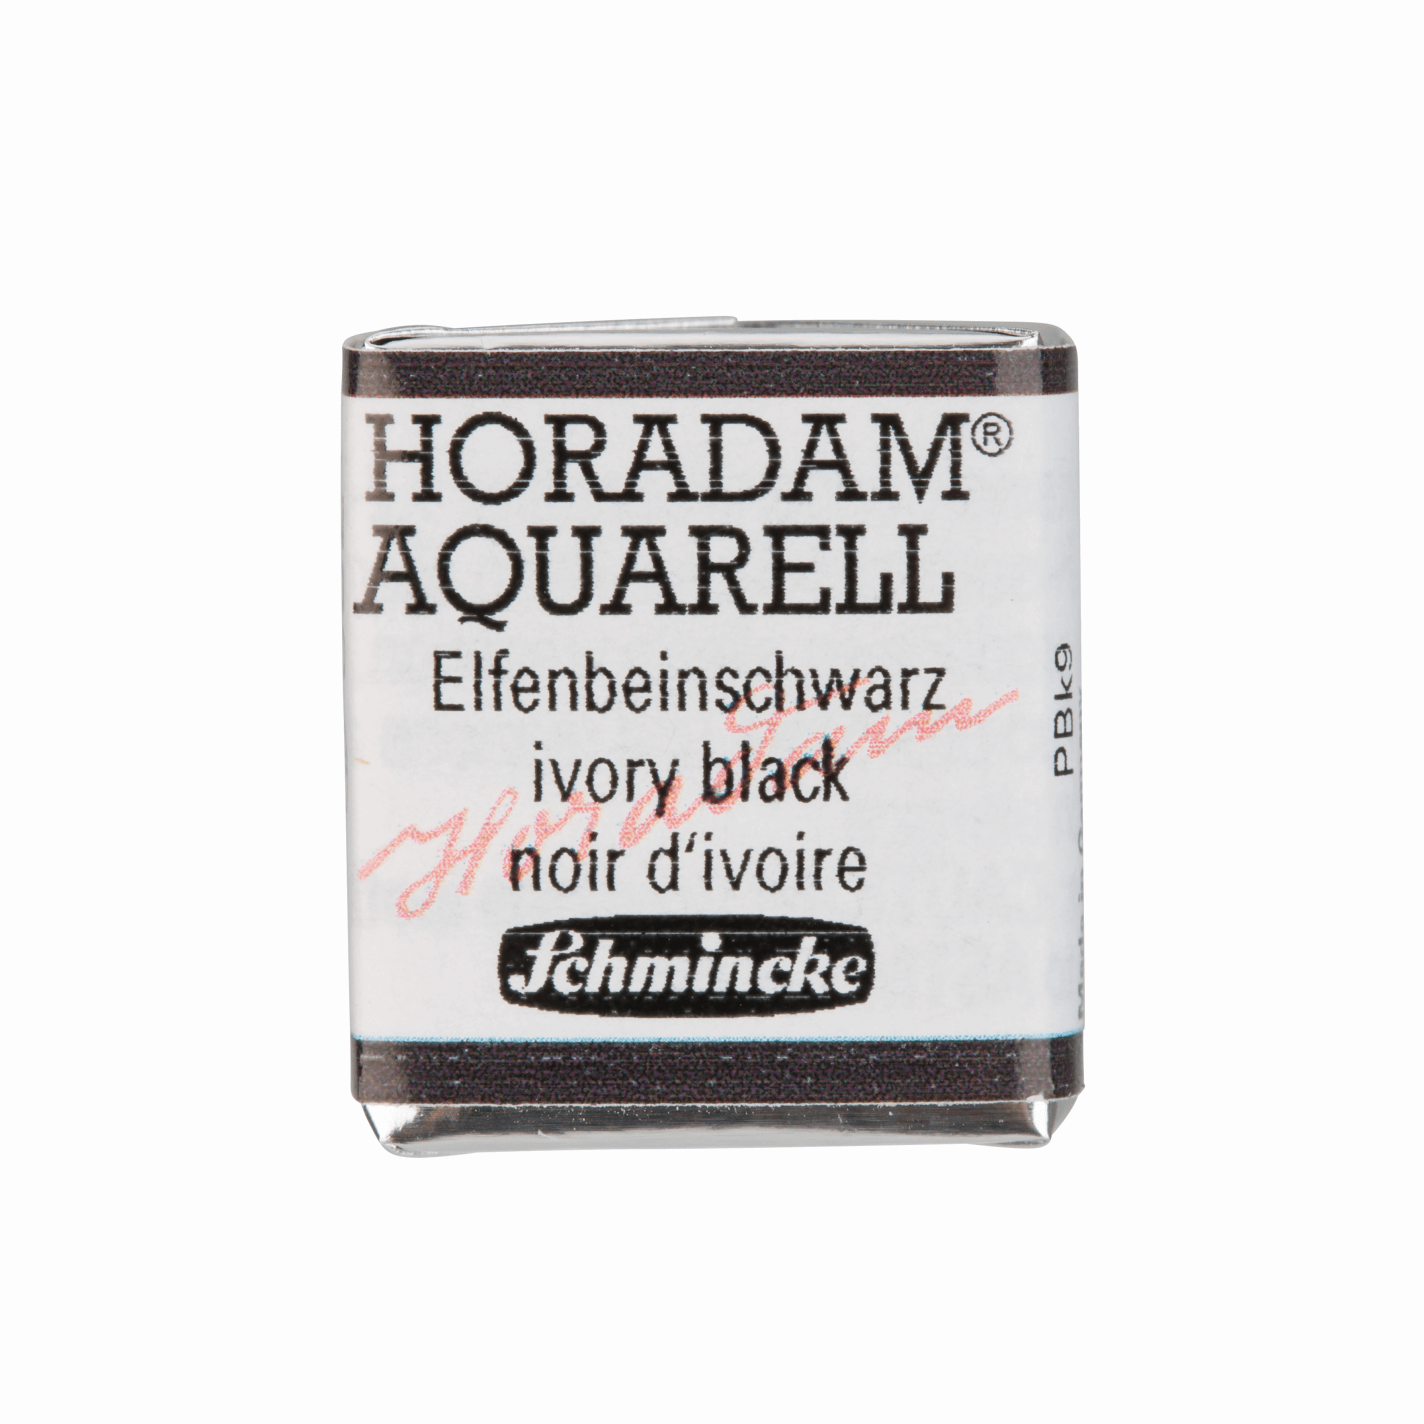 Schmincke Horadam Aquarell pans 1/2 pan Ivory Black